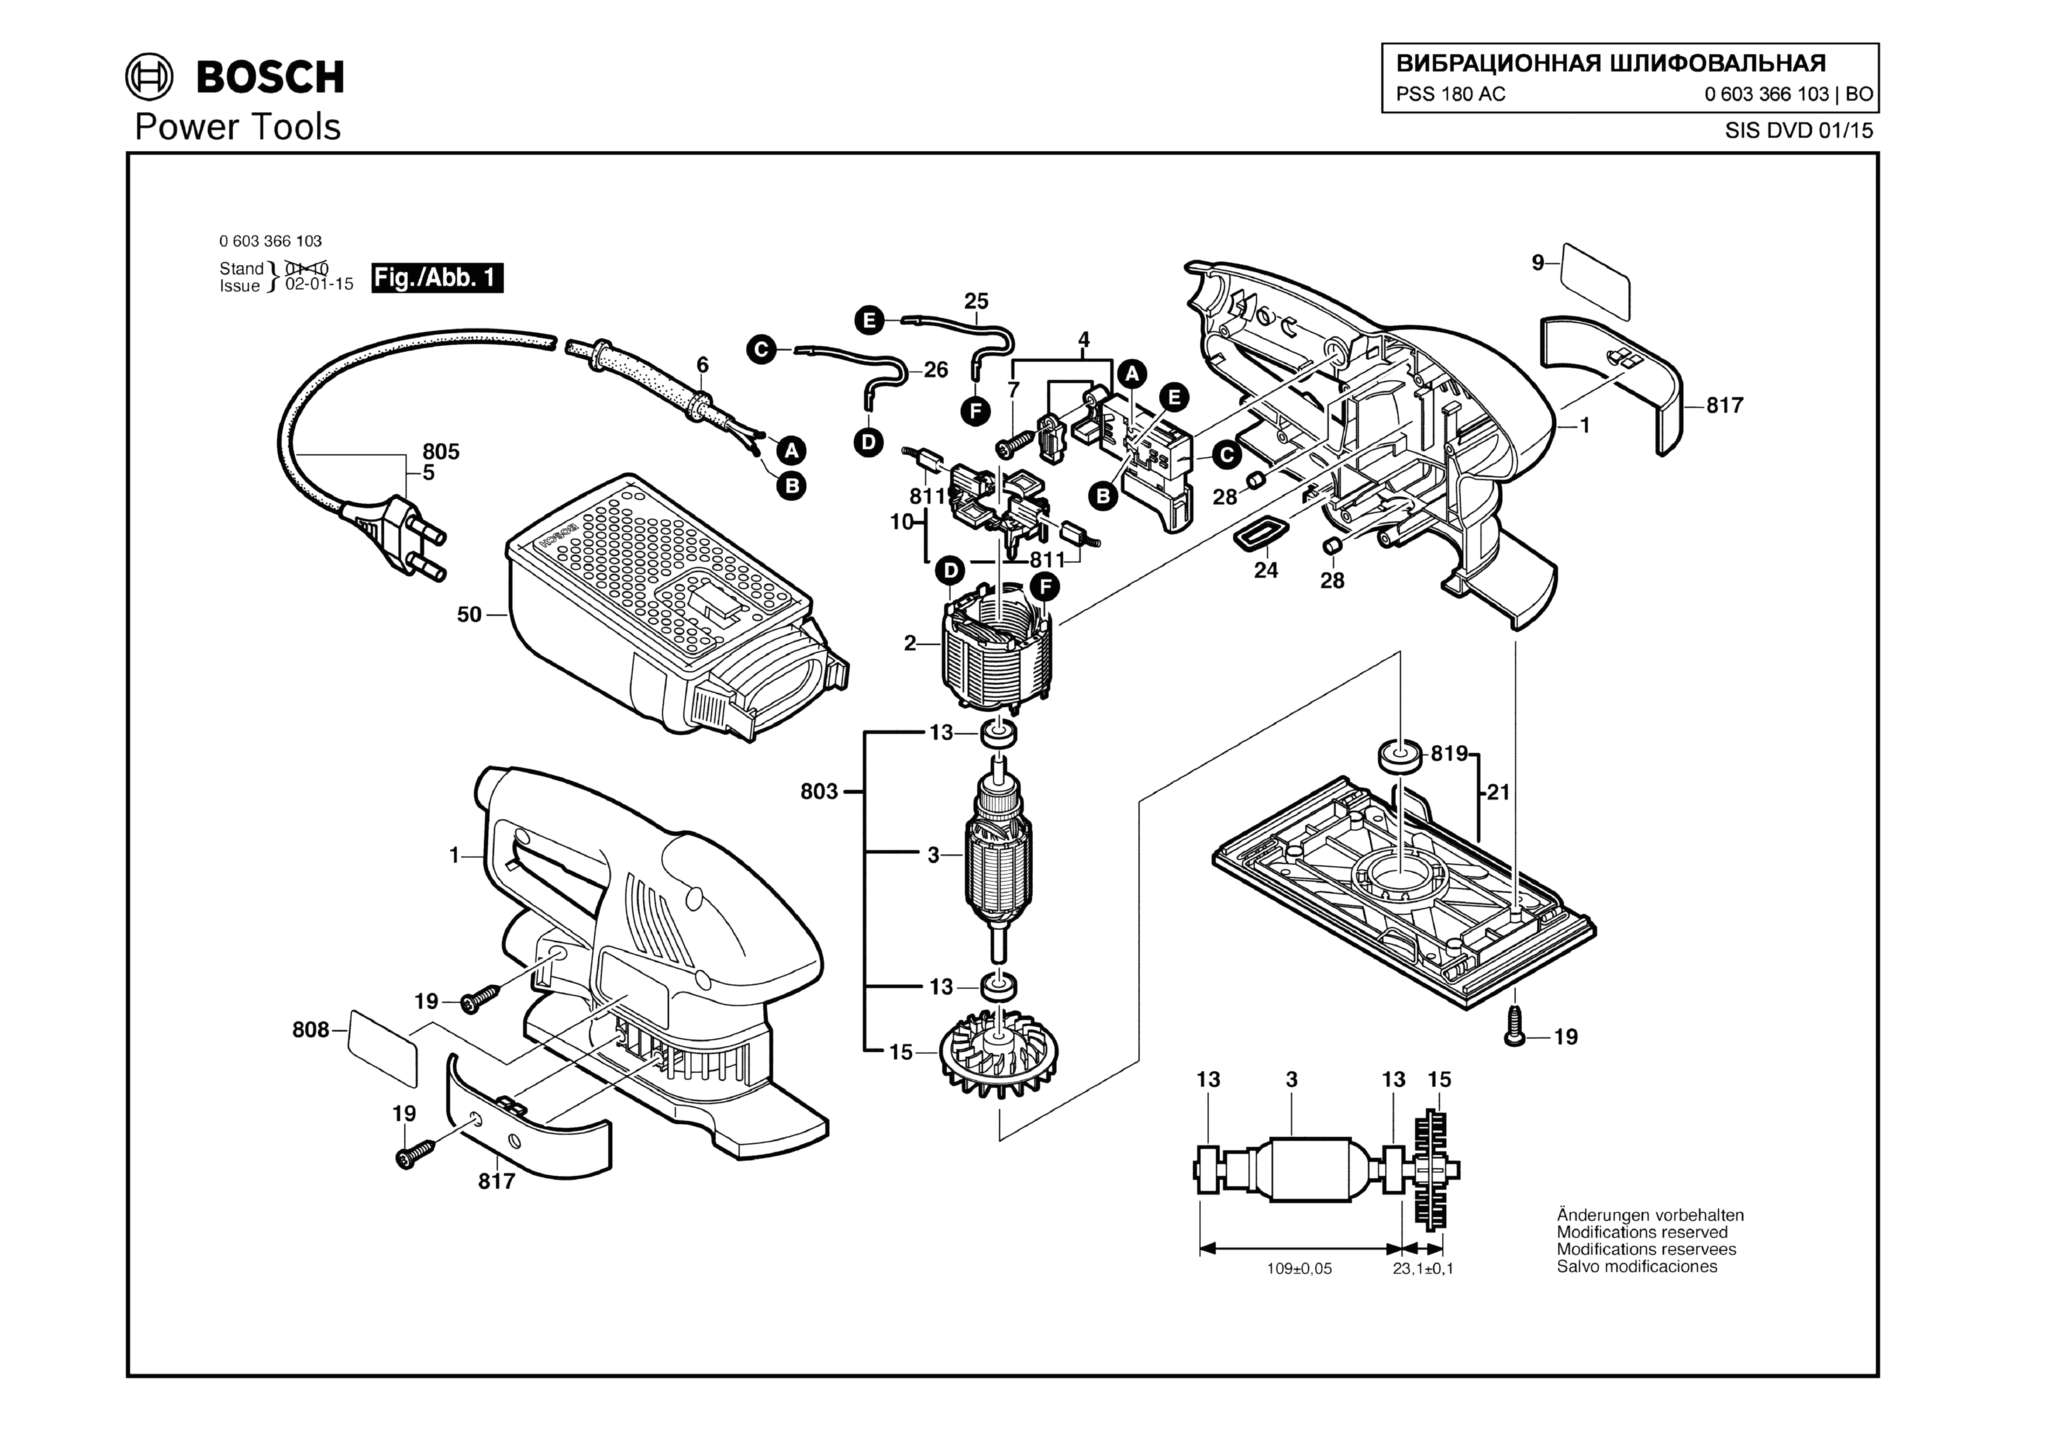 Запчасти, схема и деталировка Bosch PSS 180 AC (ТИП 0603366103)